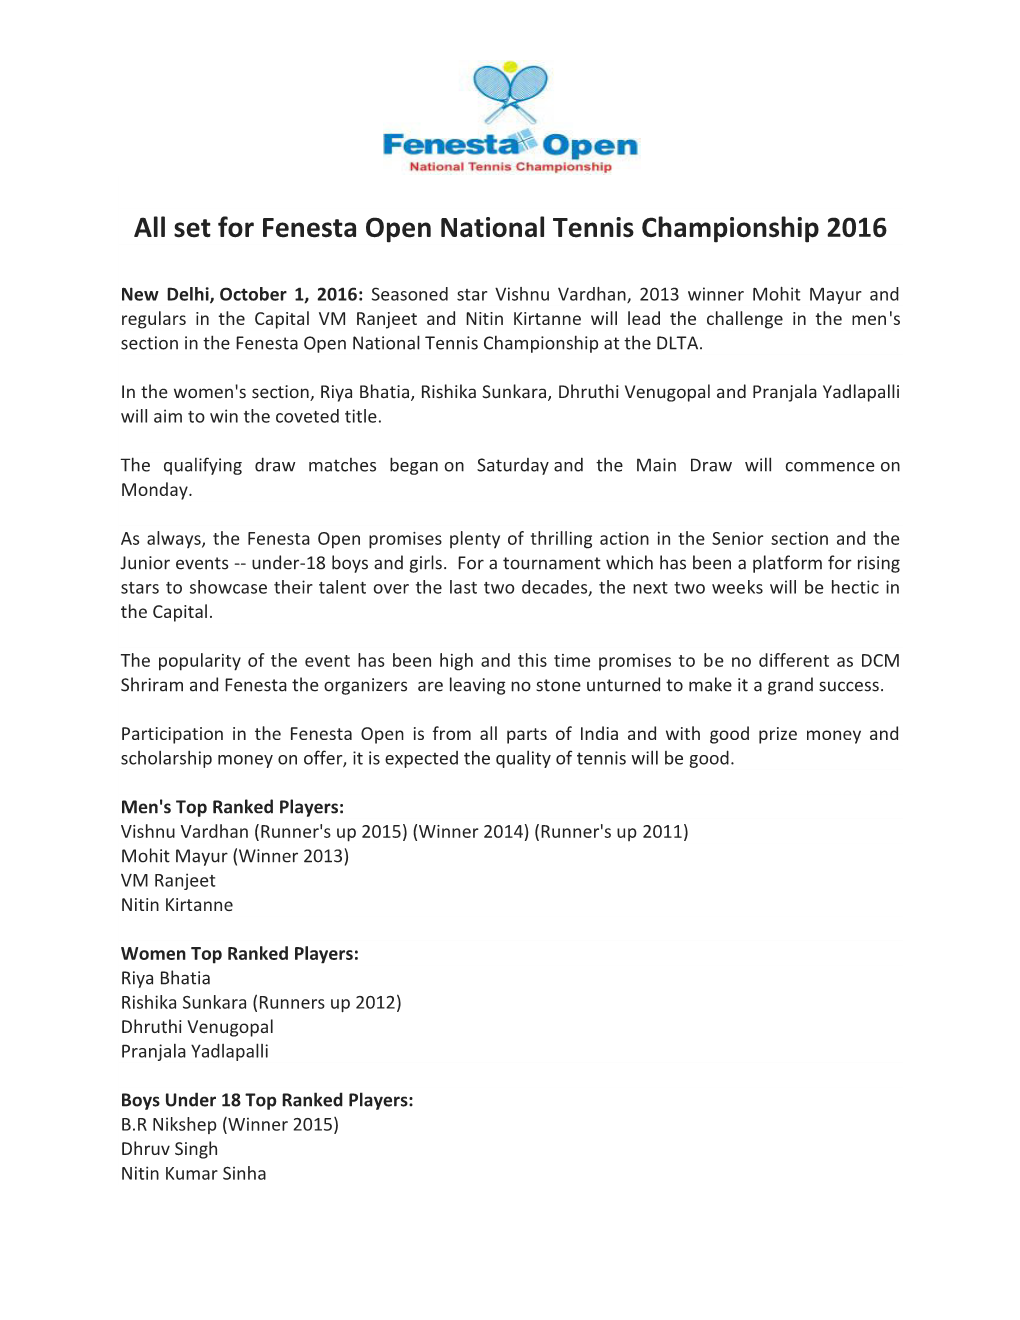 All Set for Fenesta Open National Tennis Championship 2016